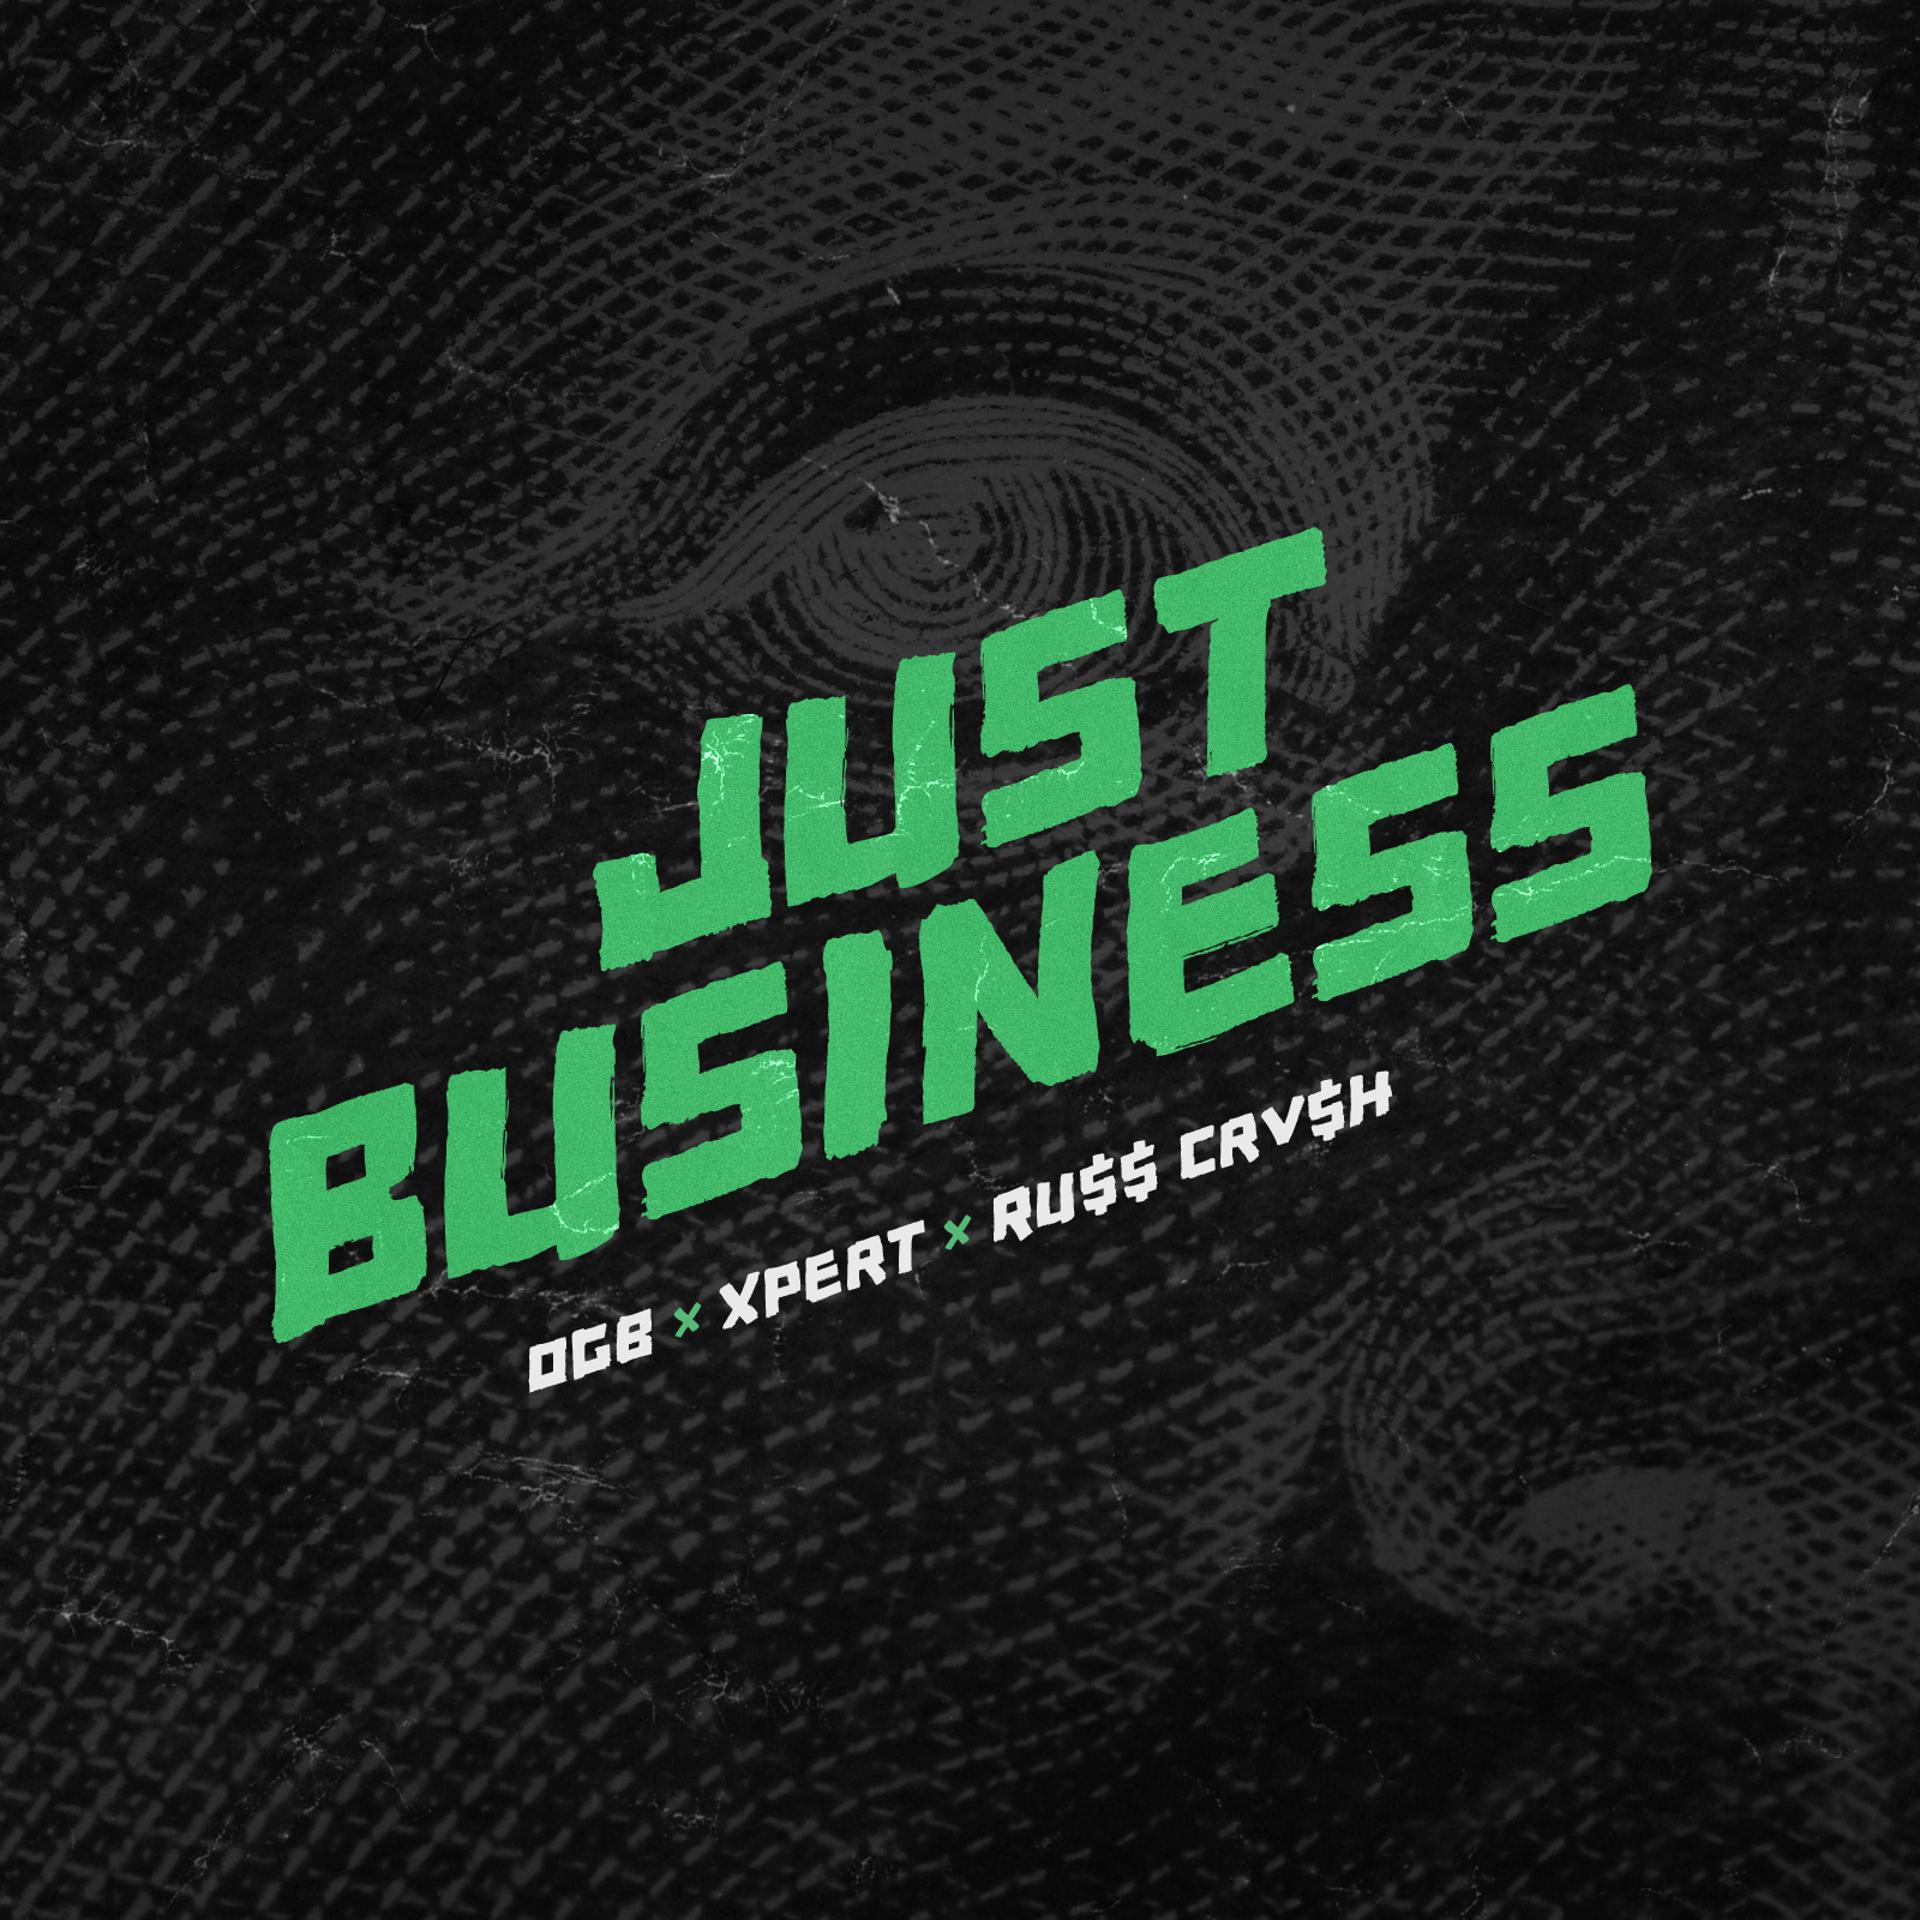 Постер альбома Just Business